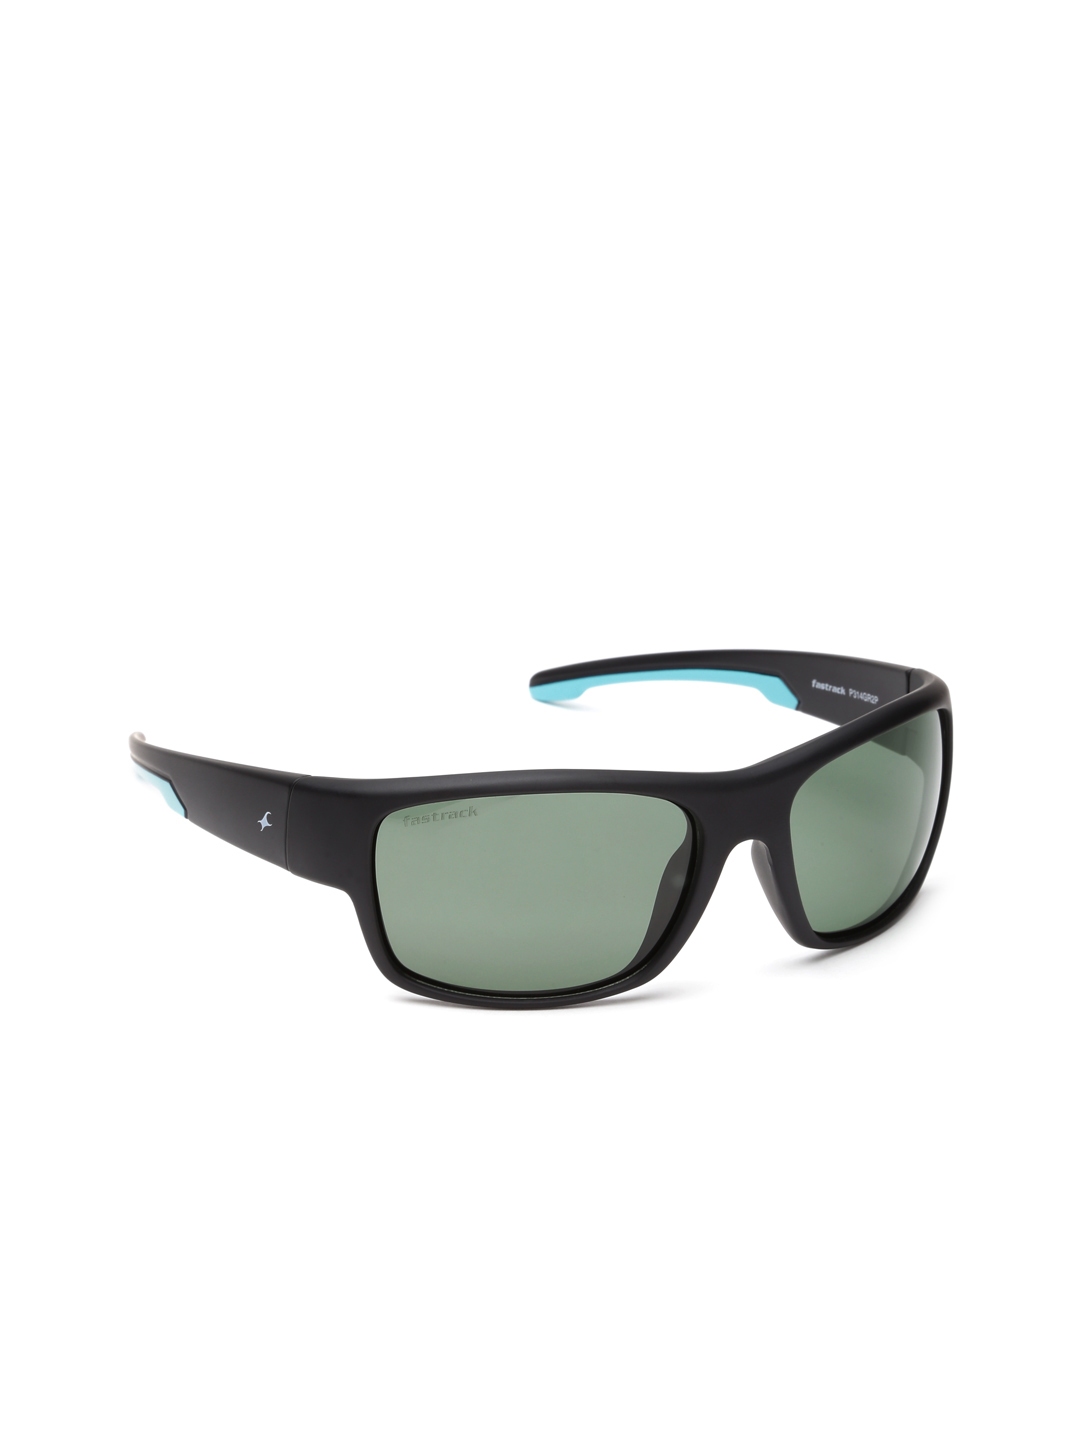 Fastrack Men Square Sunglasses NBP357BK1, 45% OFF